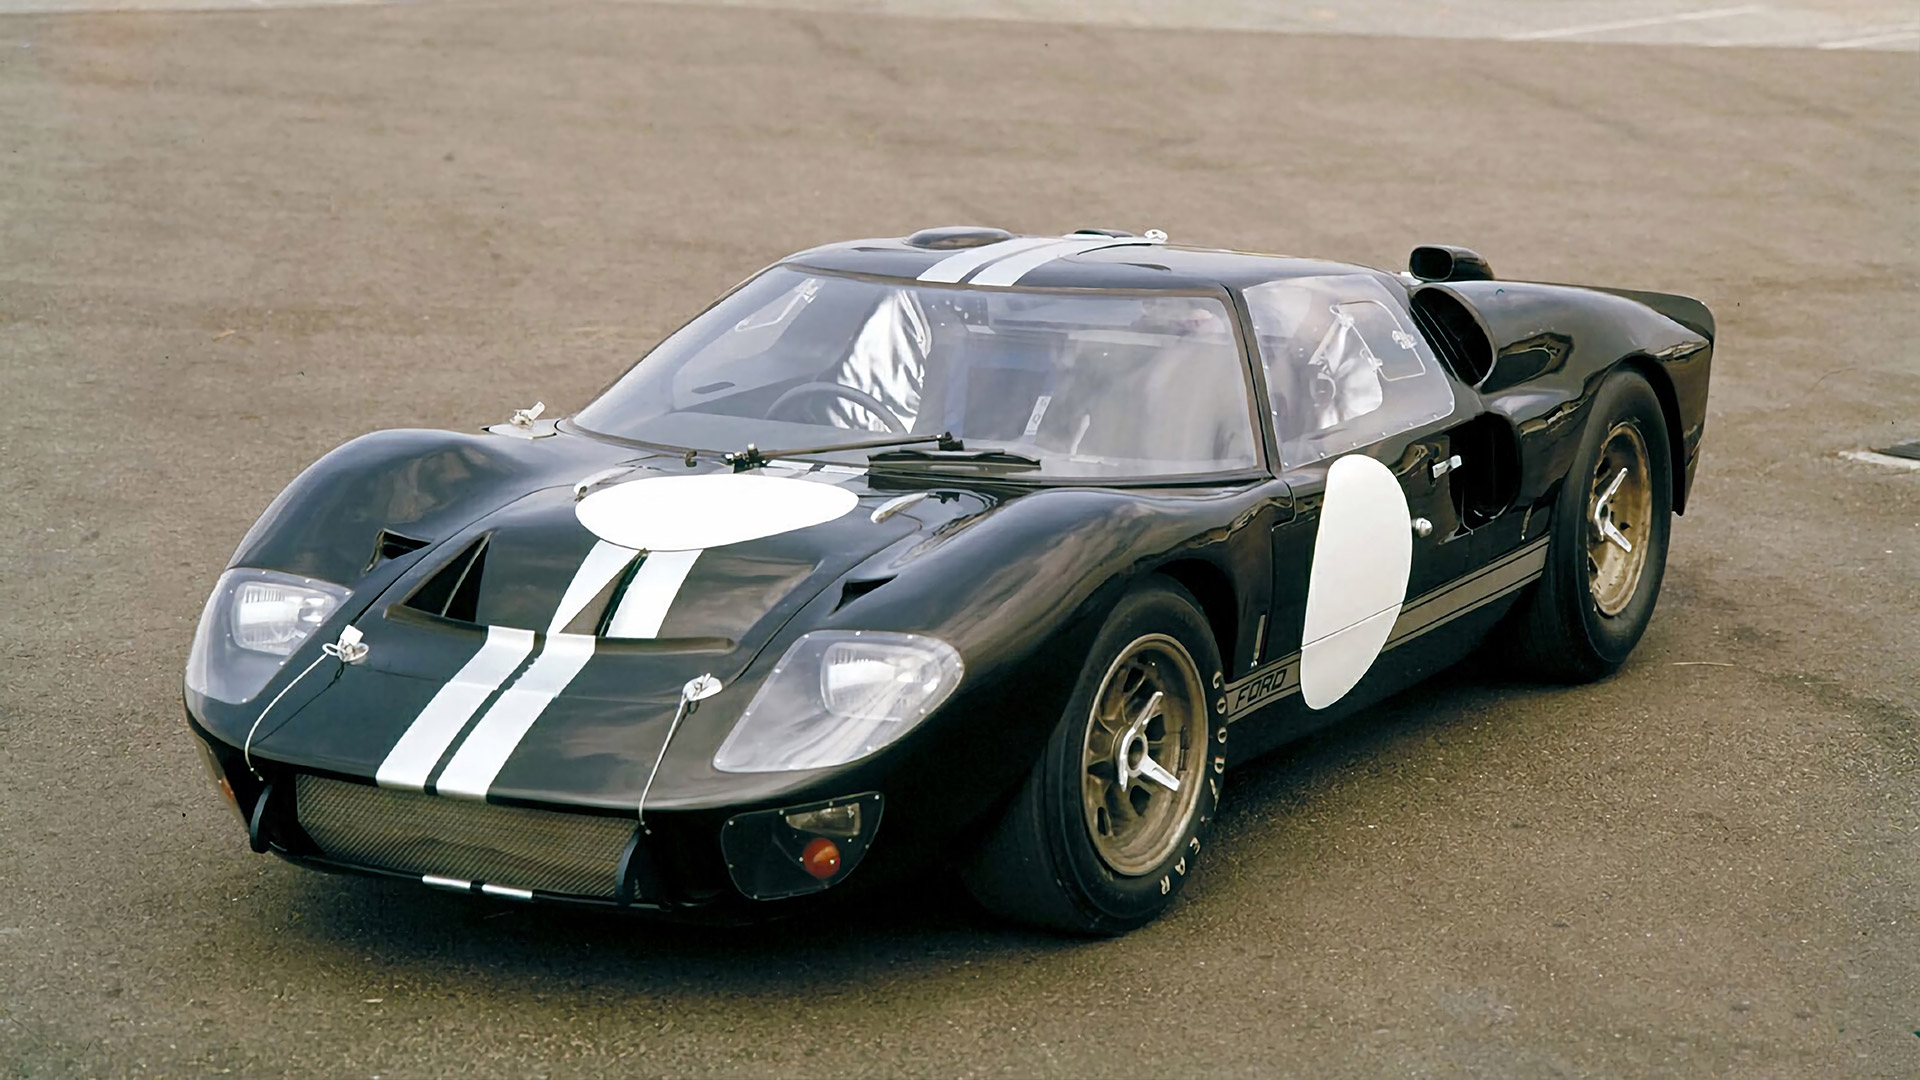  1966 Ford GT40 Le Mans Wallpaper.